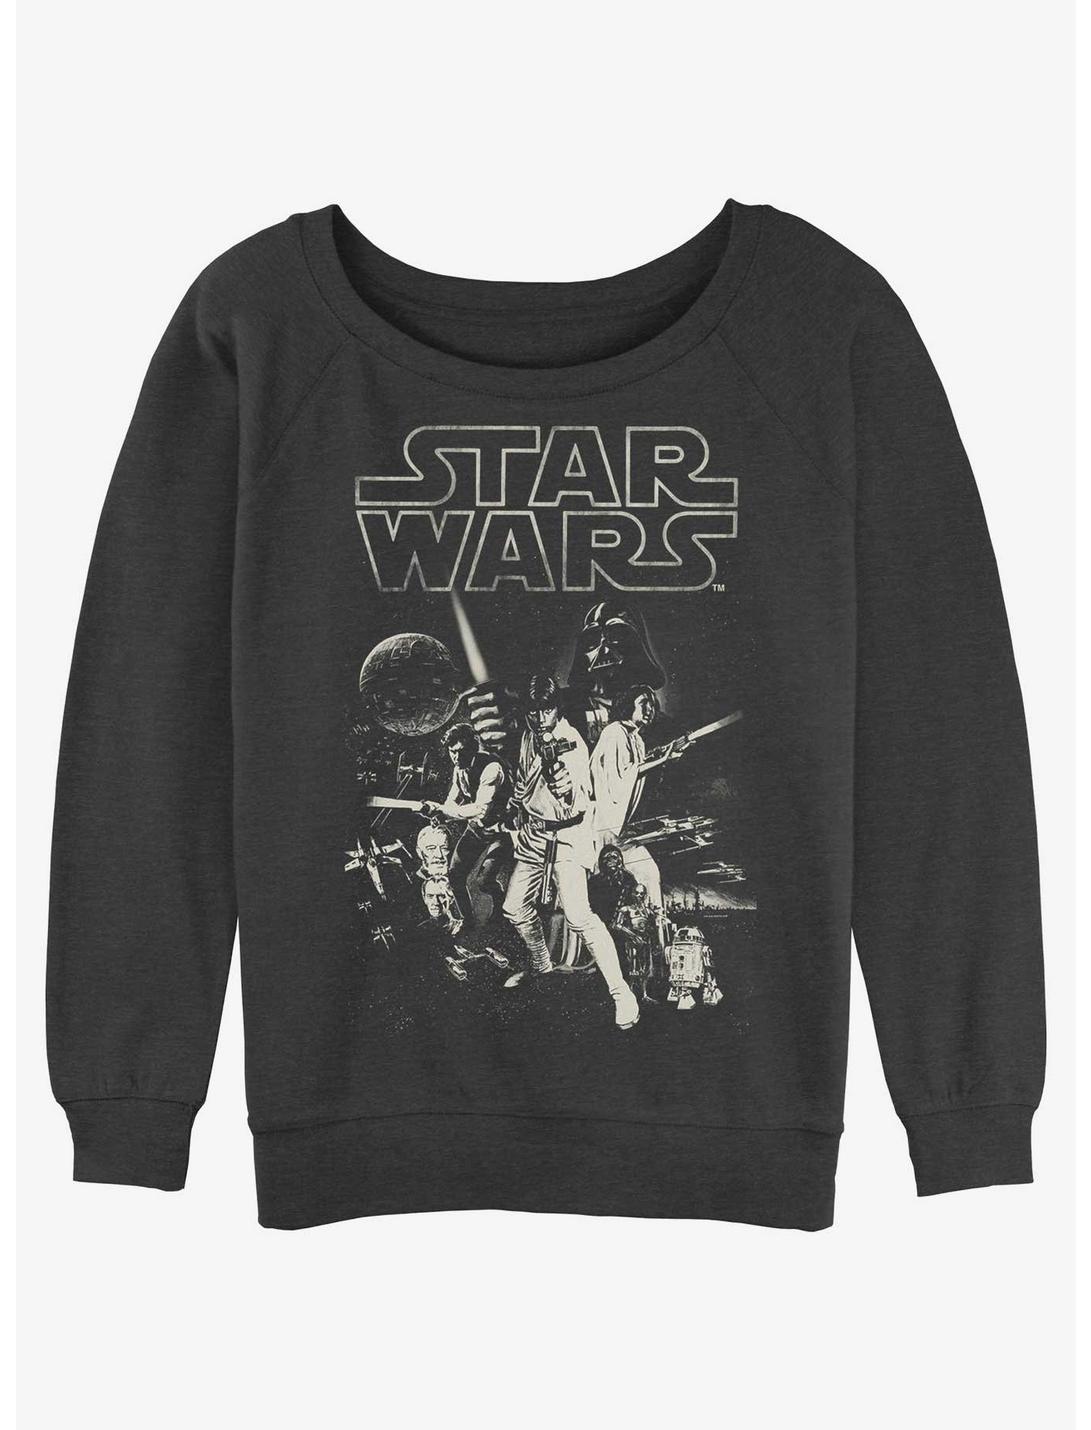 Star Wars Poster Girls Slouchy Sweatshirt, CHAR HTR, hi-res